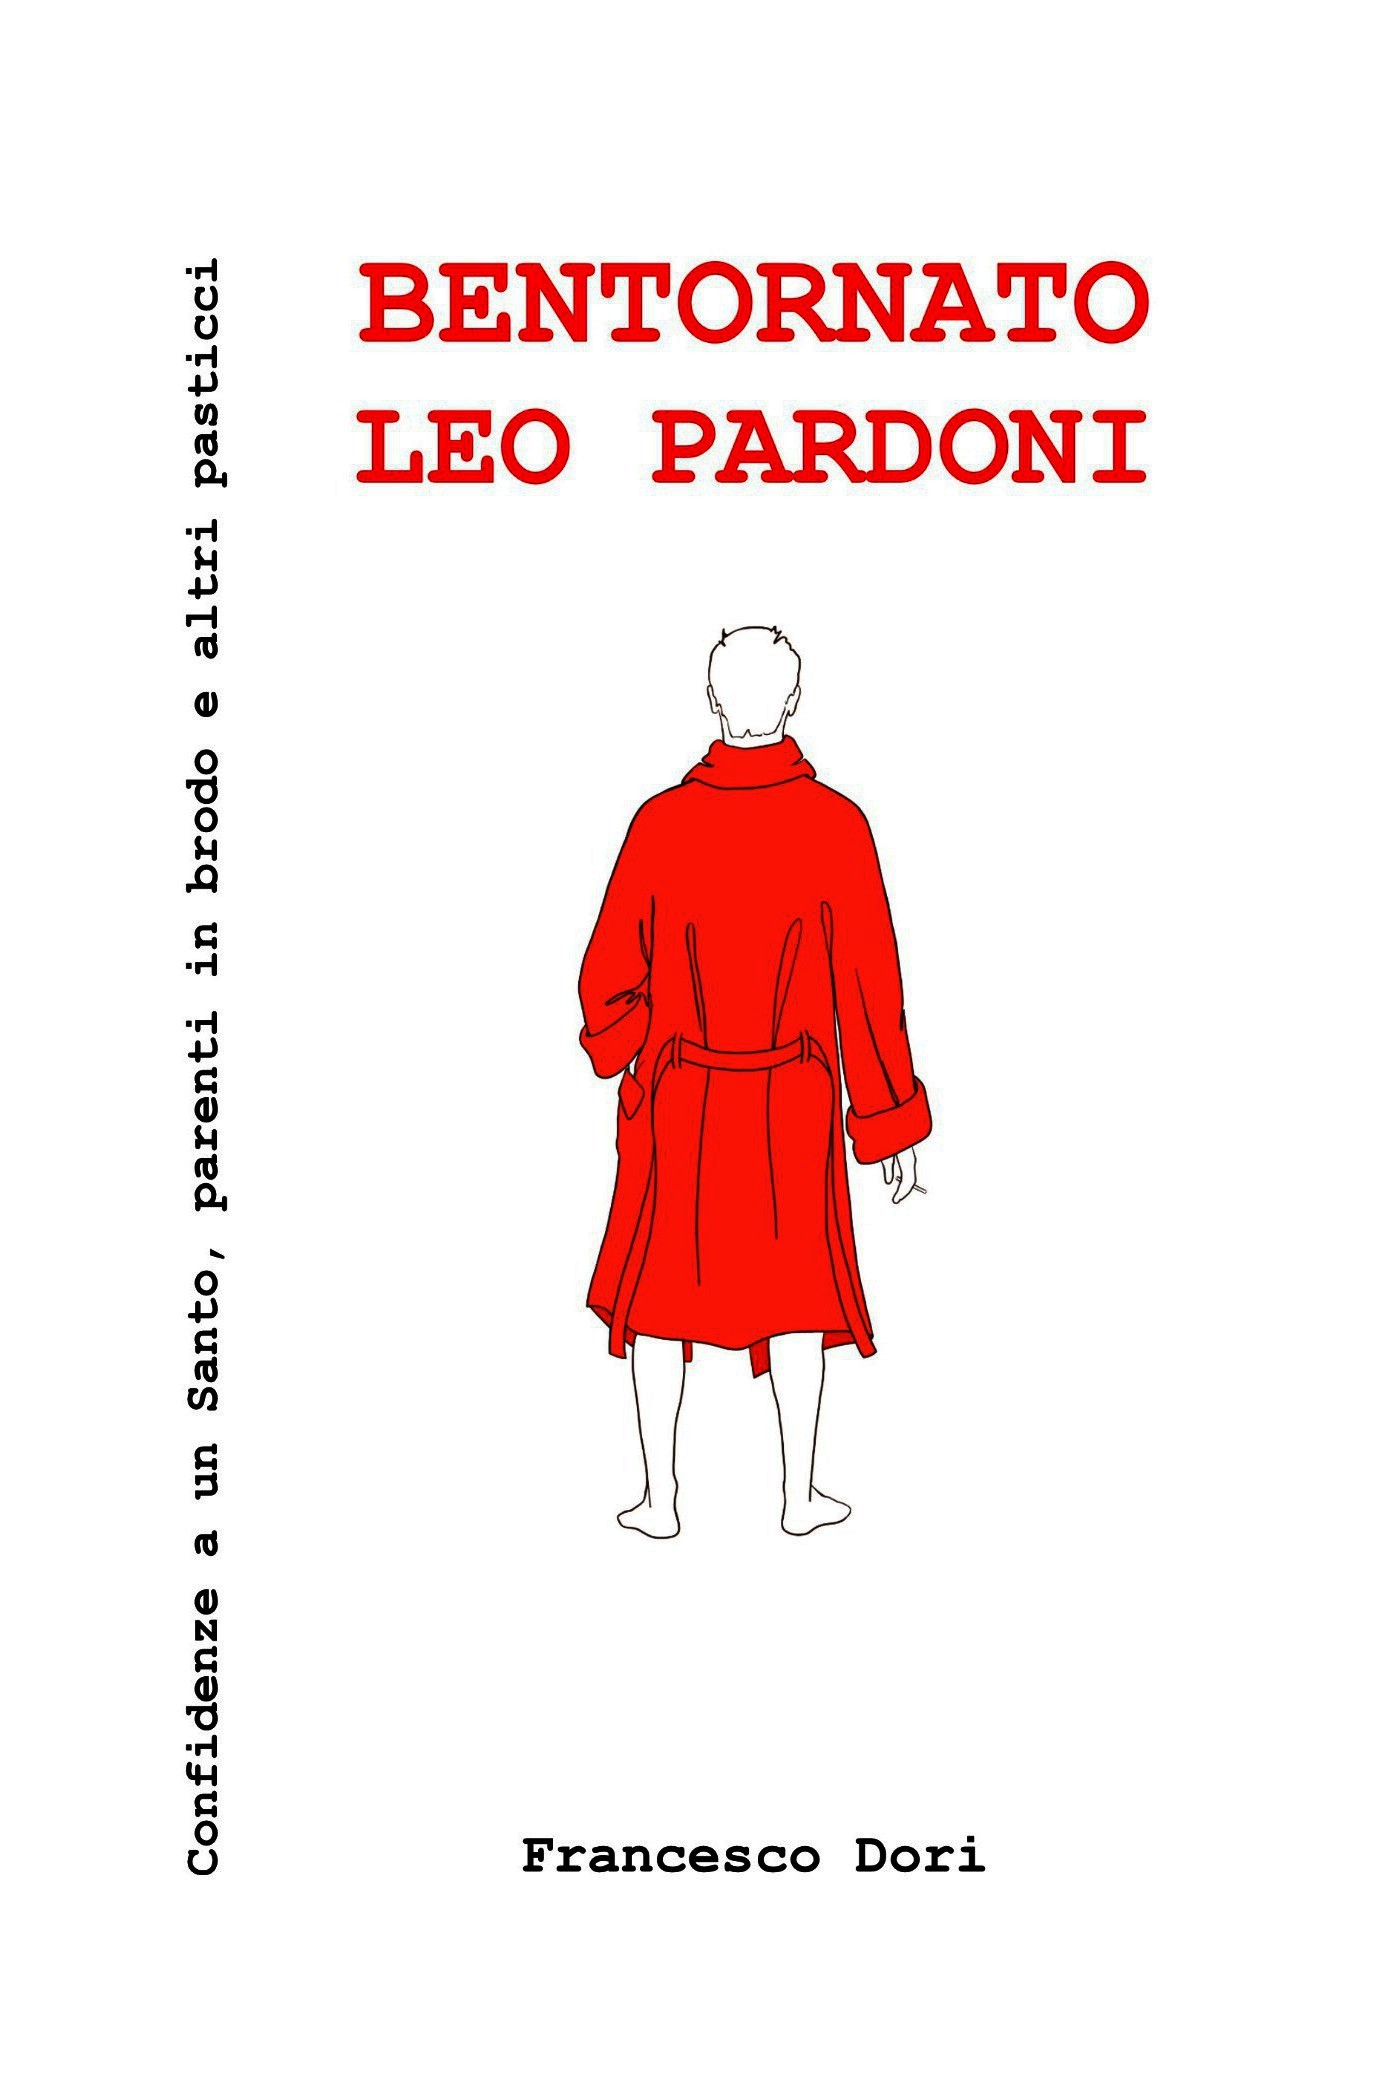 Bentornato Leo Pardoni - Librerie.coop